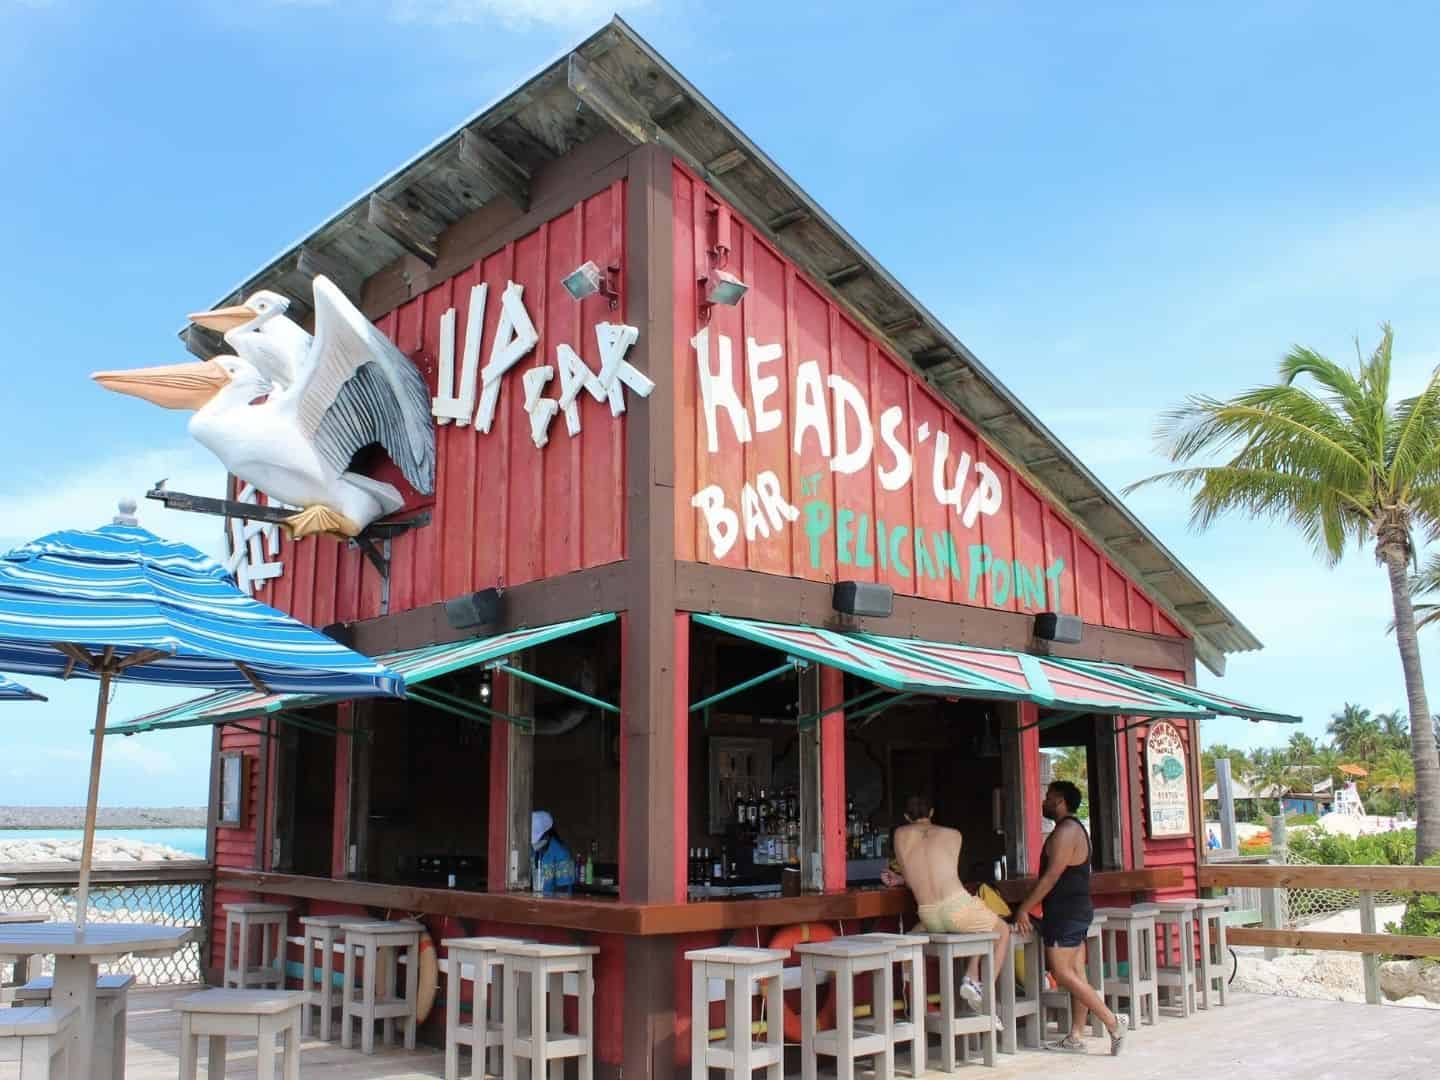 Head's Up Bar on Disney Castaway Cay 